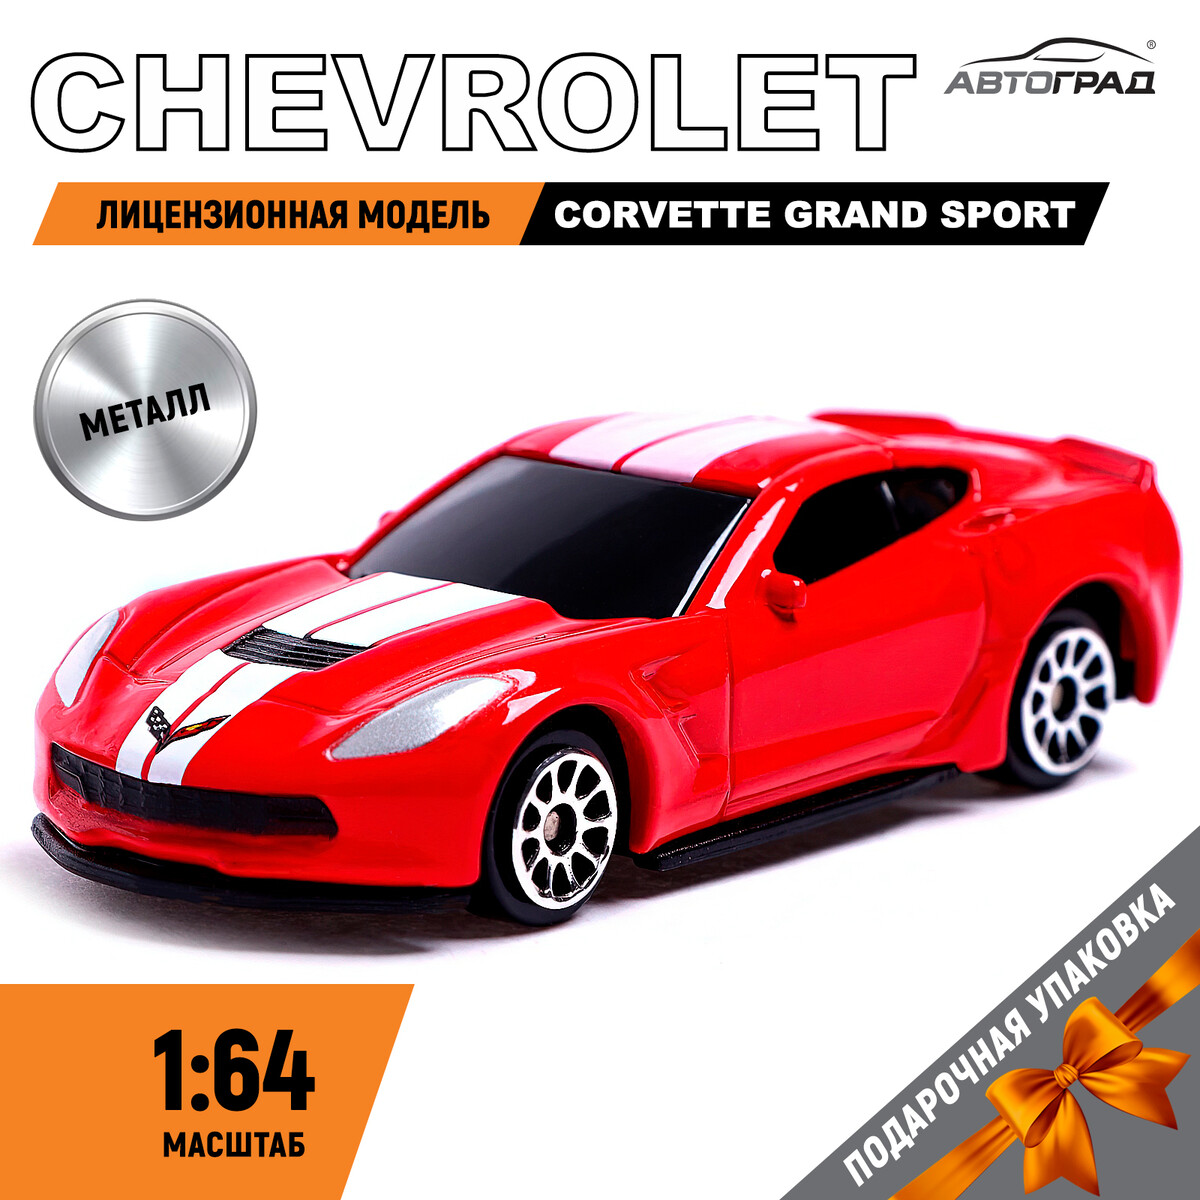 Машина металлическая chevrolet corvette grand sport, 1:64, цвет красный